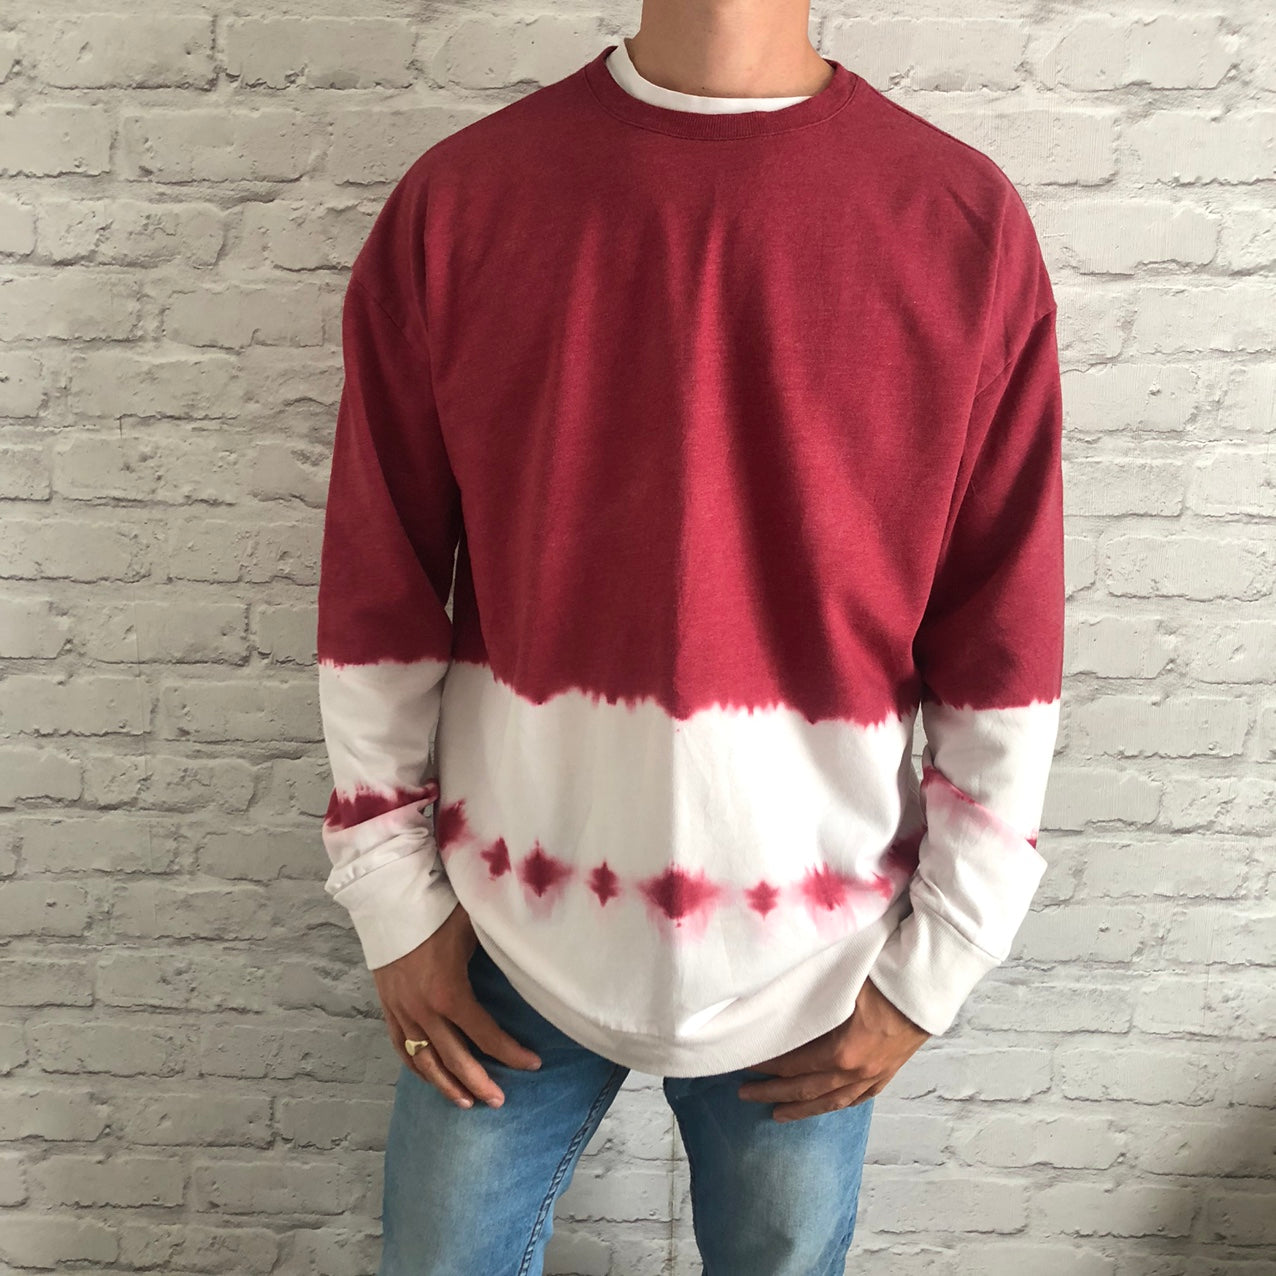 Unbranded Men's Dyed Vintage Sweatshirt - XL